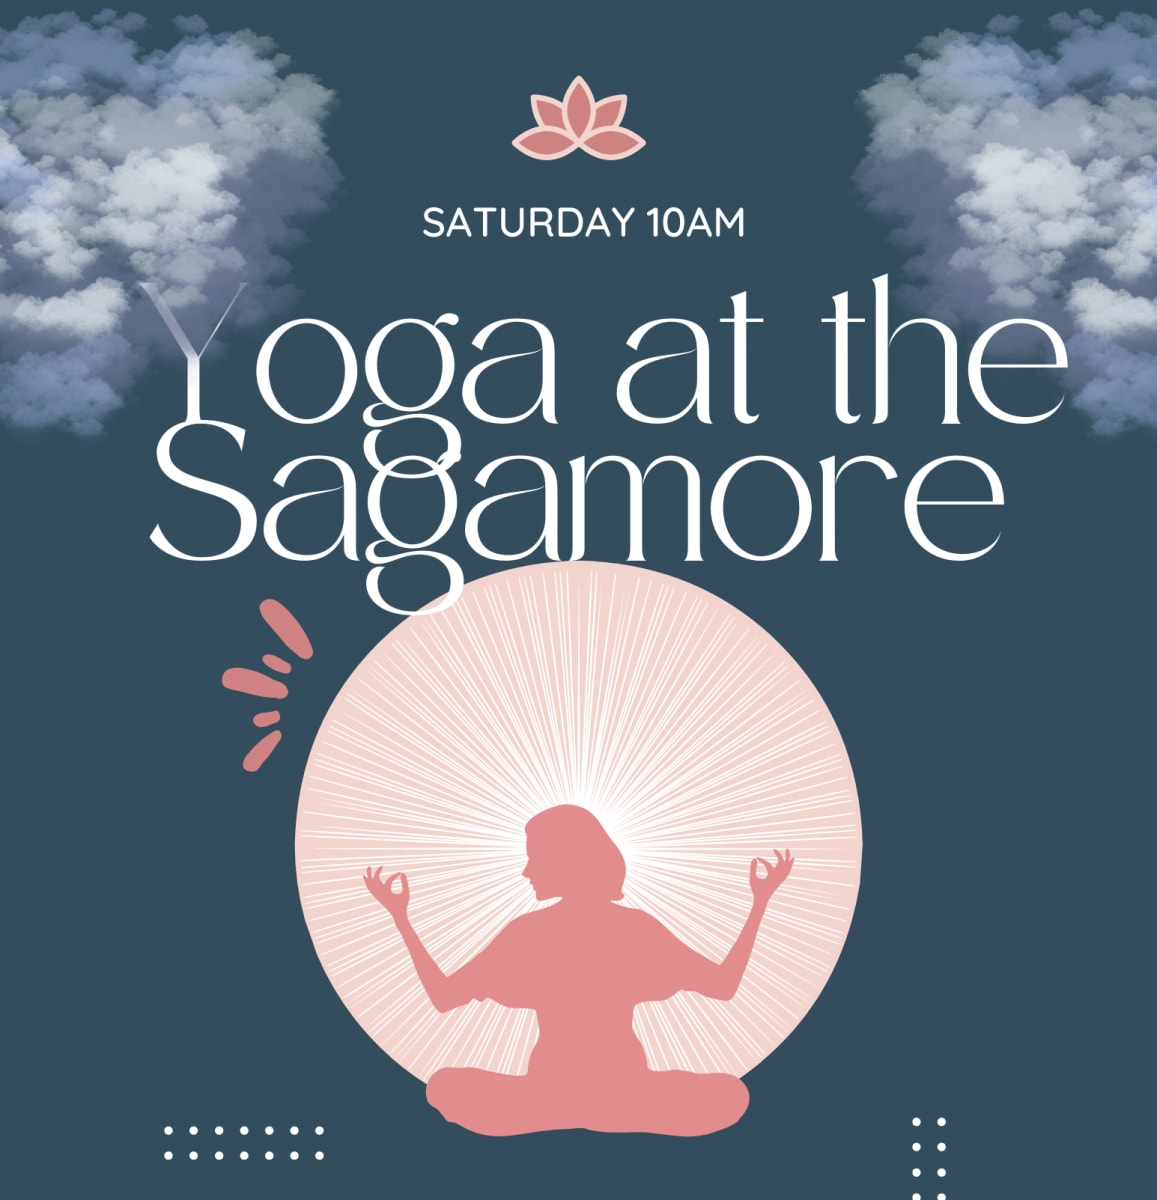 Yoga at the sagamore Flyer #1